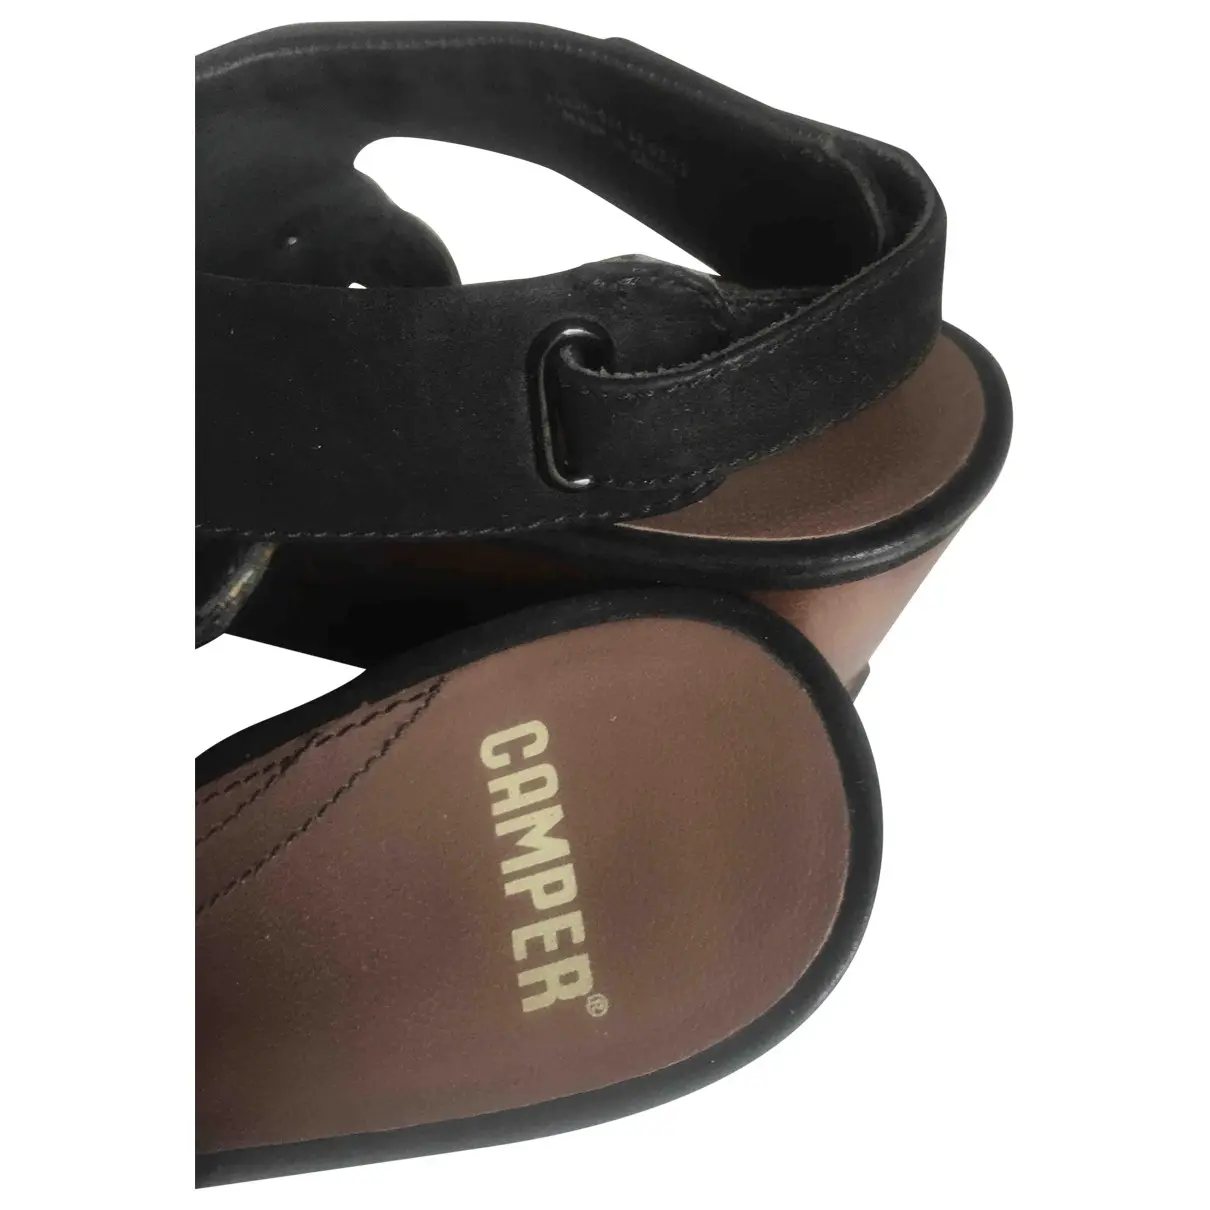 Camper Leather sandals for sale